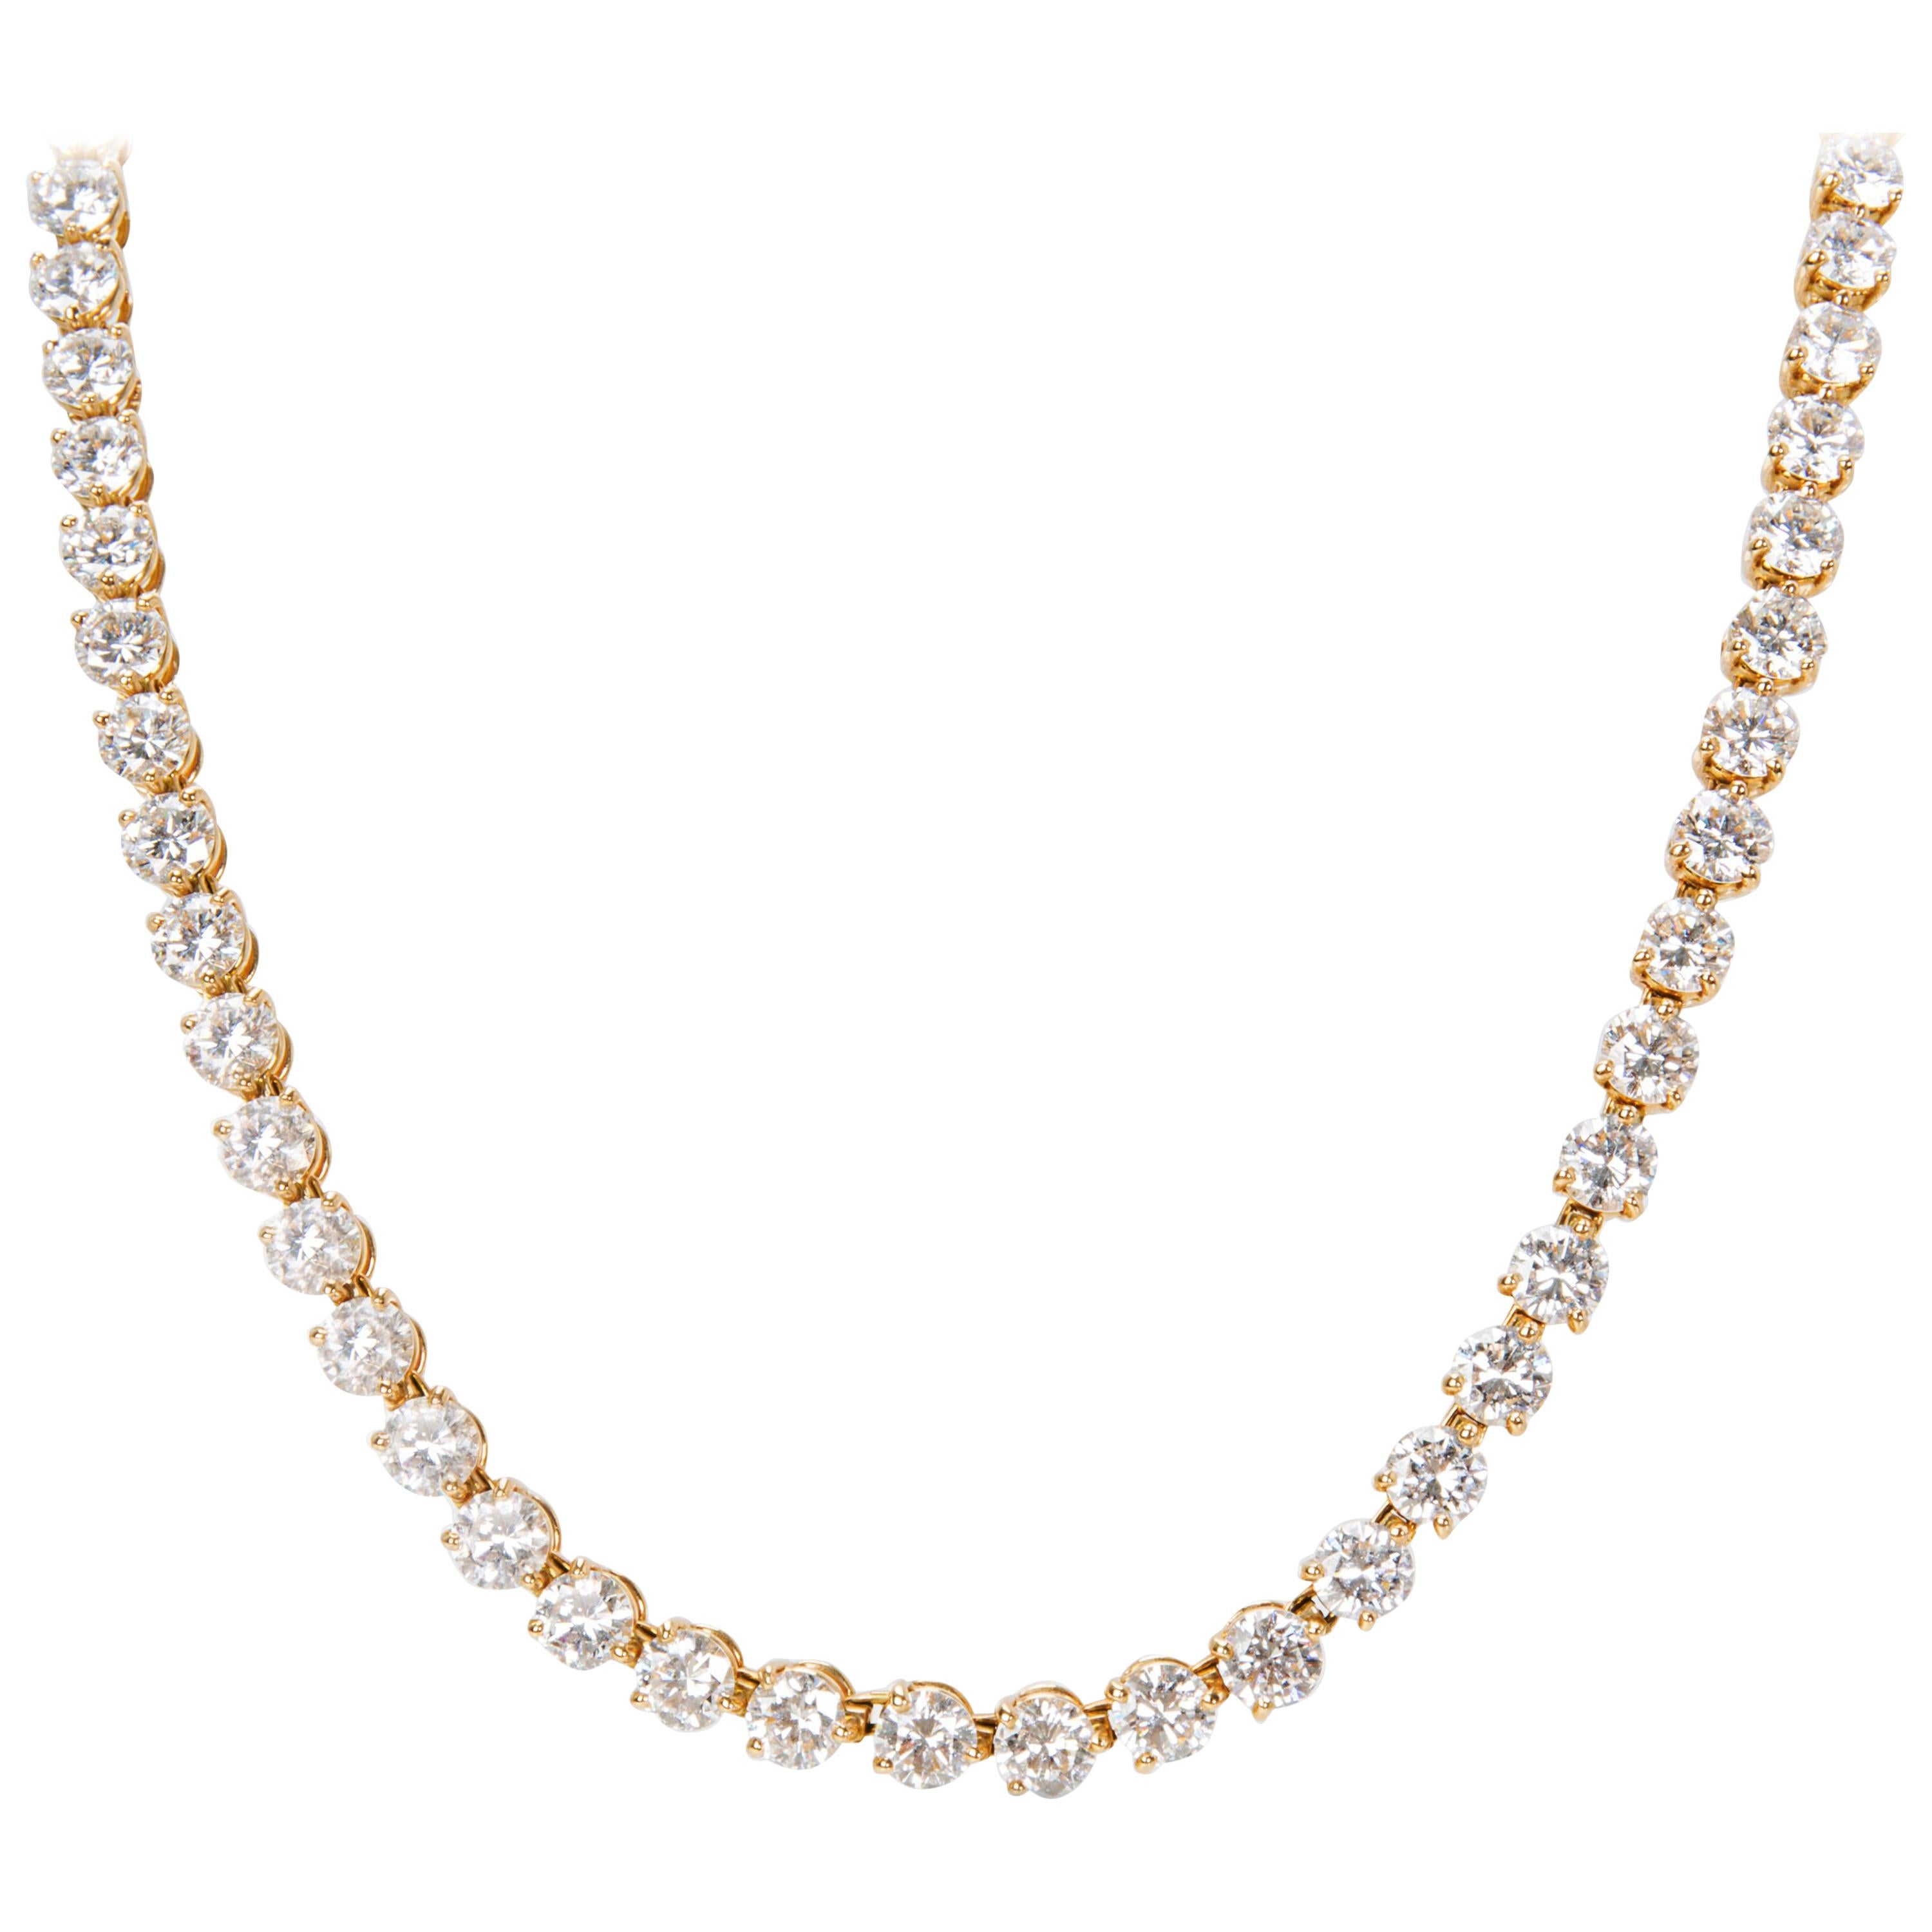 Cartier Diamond Tennis Necklace in 18 Karat Yellow Gold 25.20 Carat